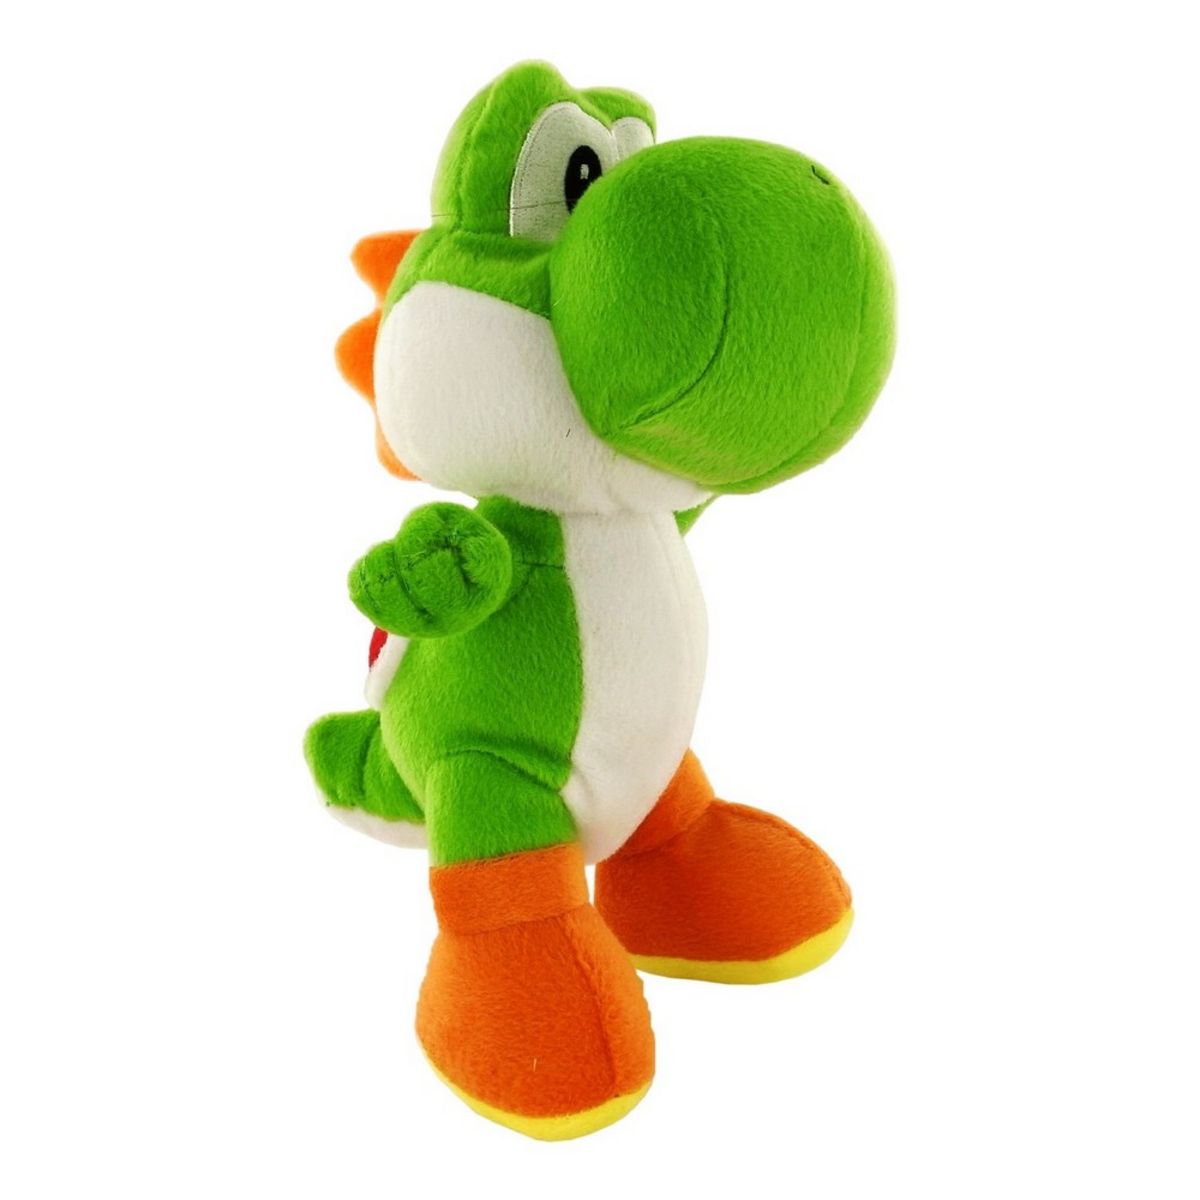  Grande peluche Yoshi vert Nintendo 55 cm